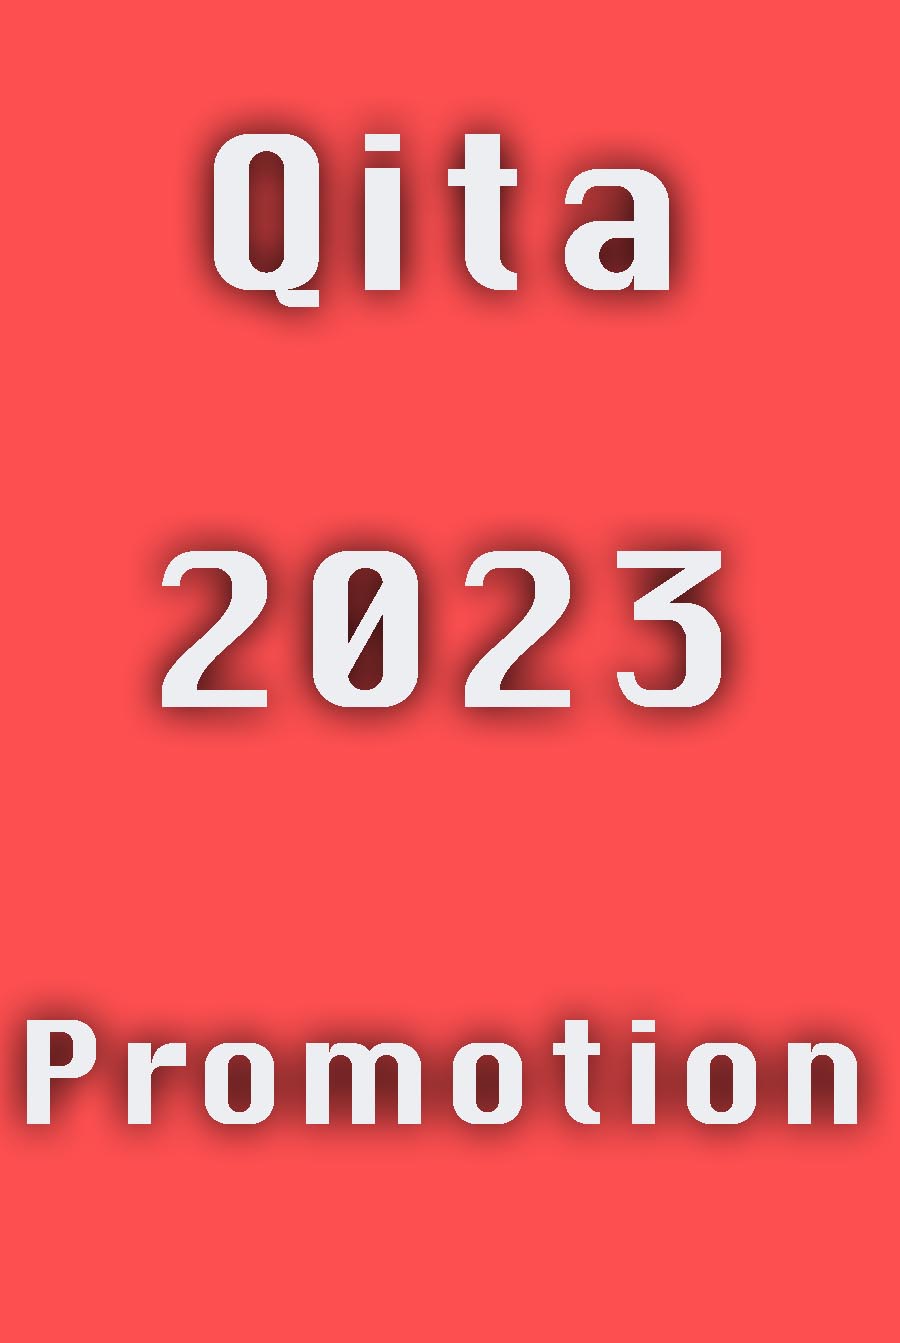 Qita 2021 Summer Promotion